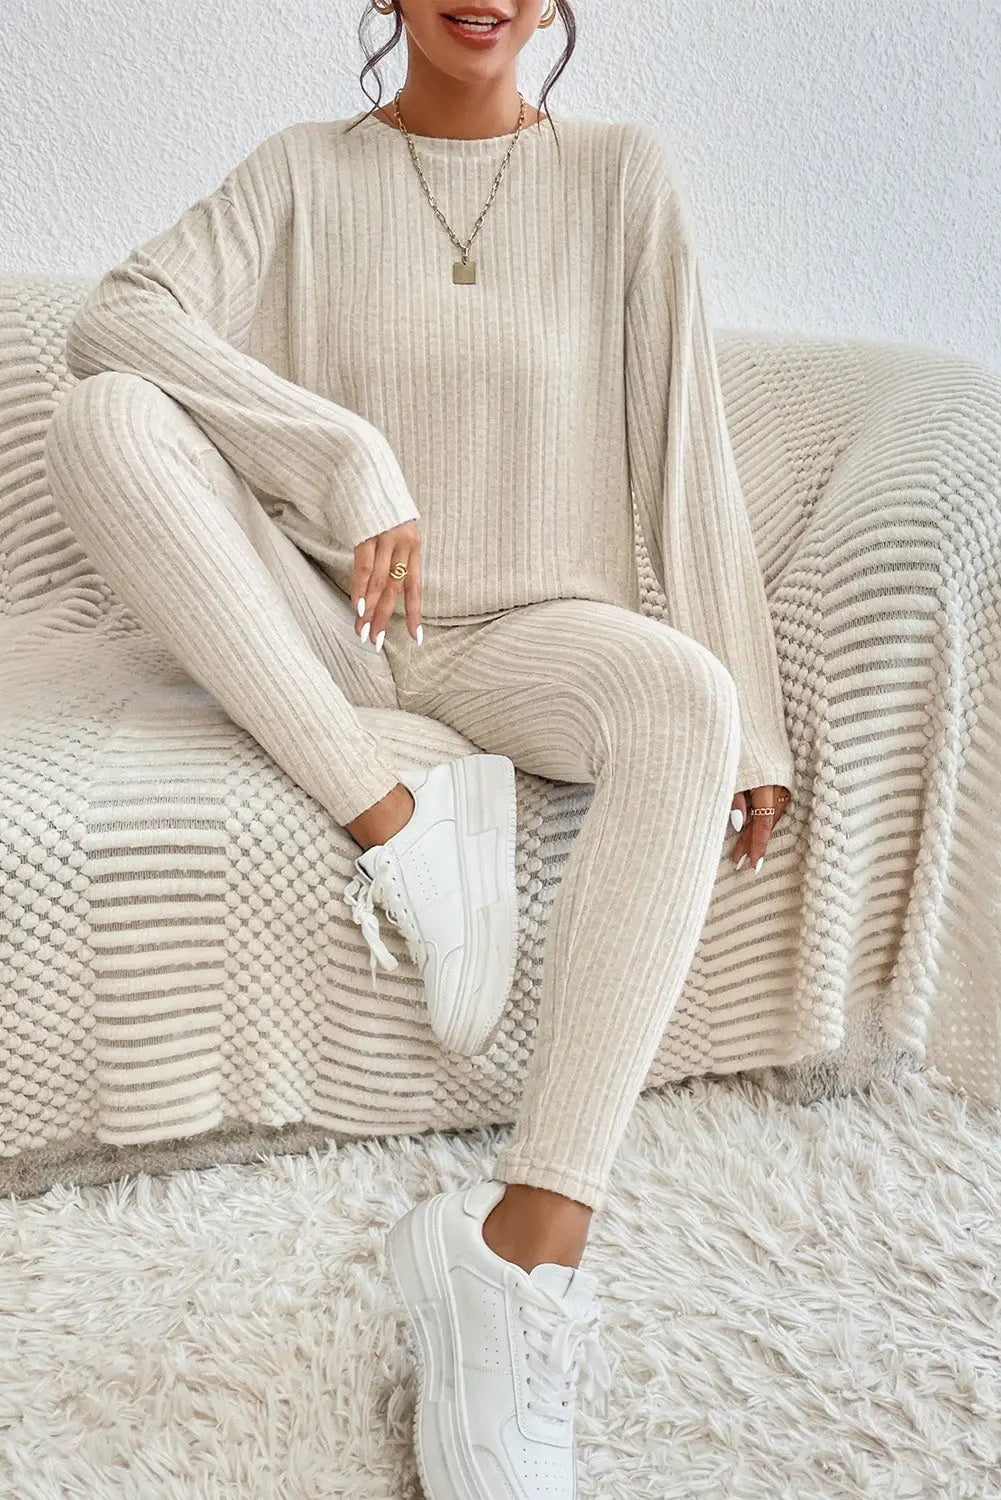 Gray ribbed knit slouchy hoodie wide leg pants set - loungewear